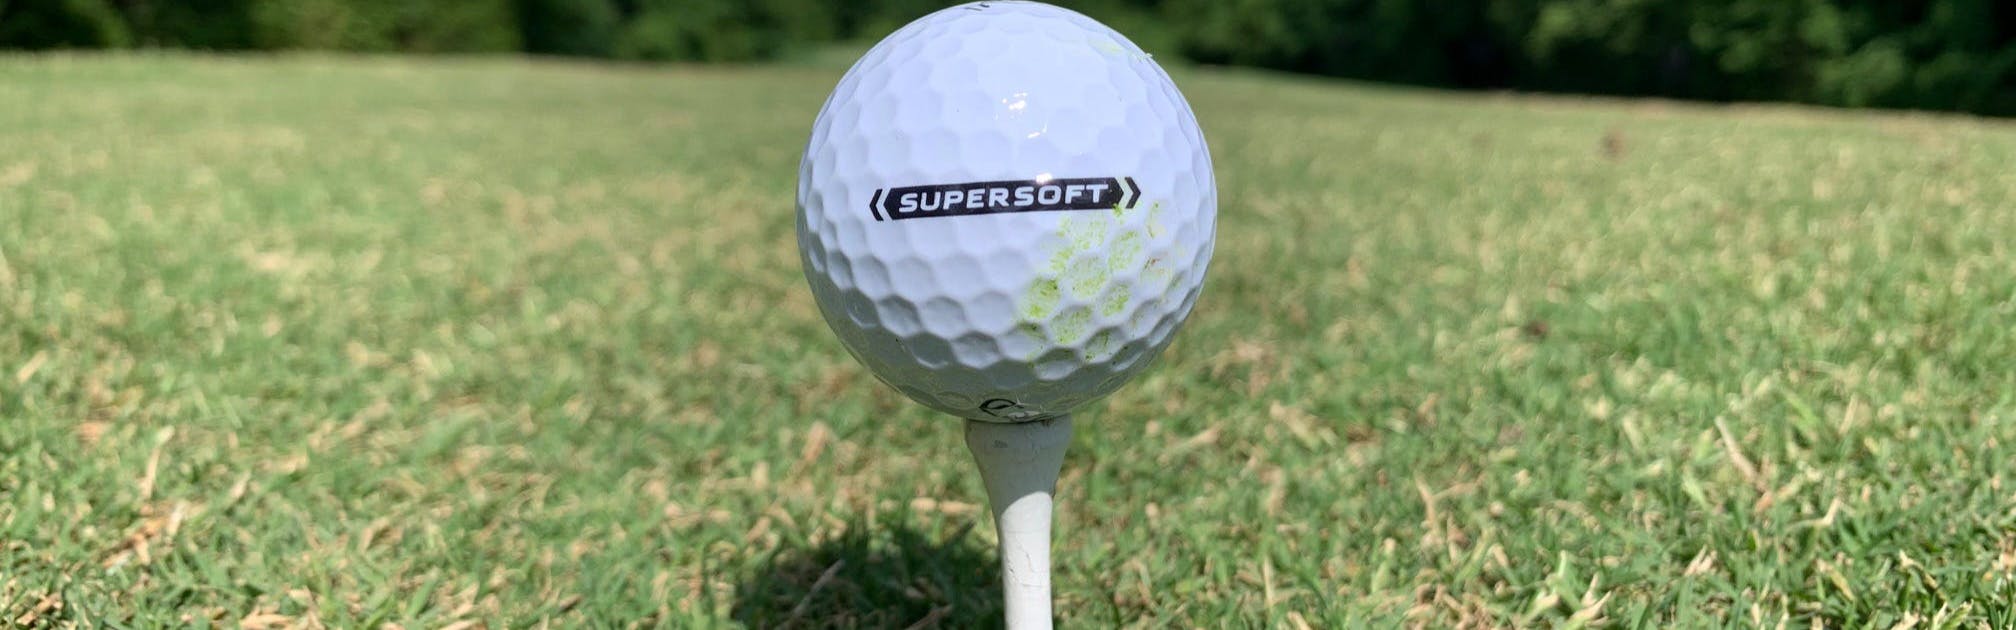 Expert Review: Callaway 2021 SuperSoft Golf Balls | Curated.com